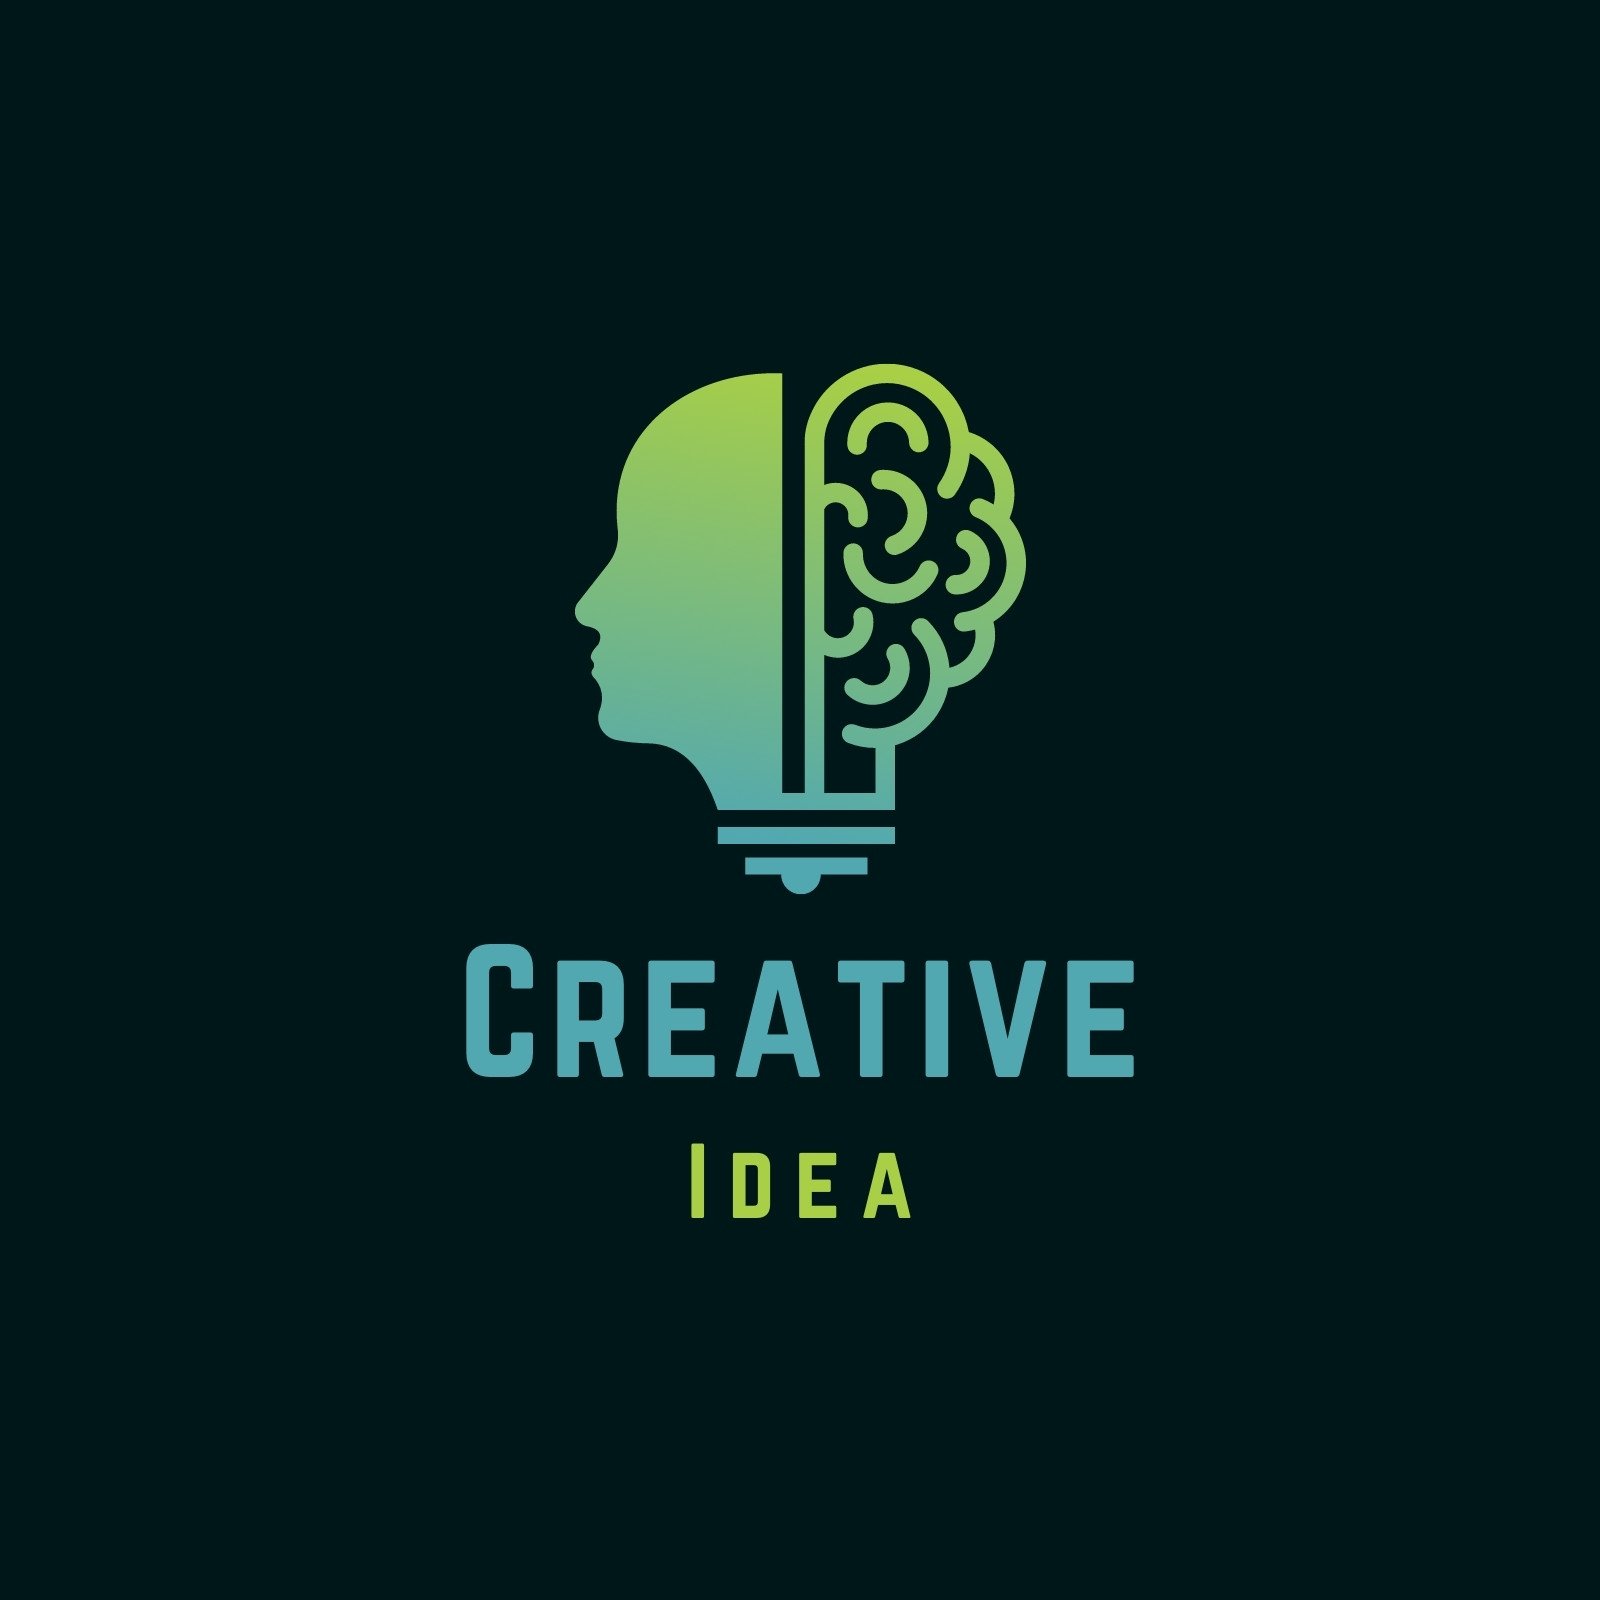 Free printable and customizable education logo templates | Canva